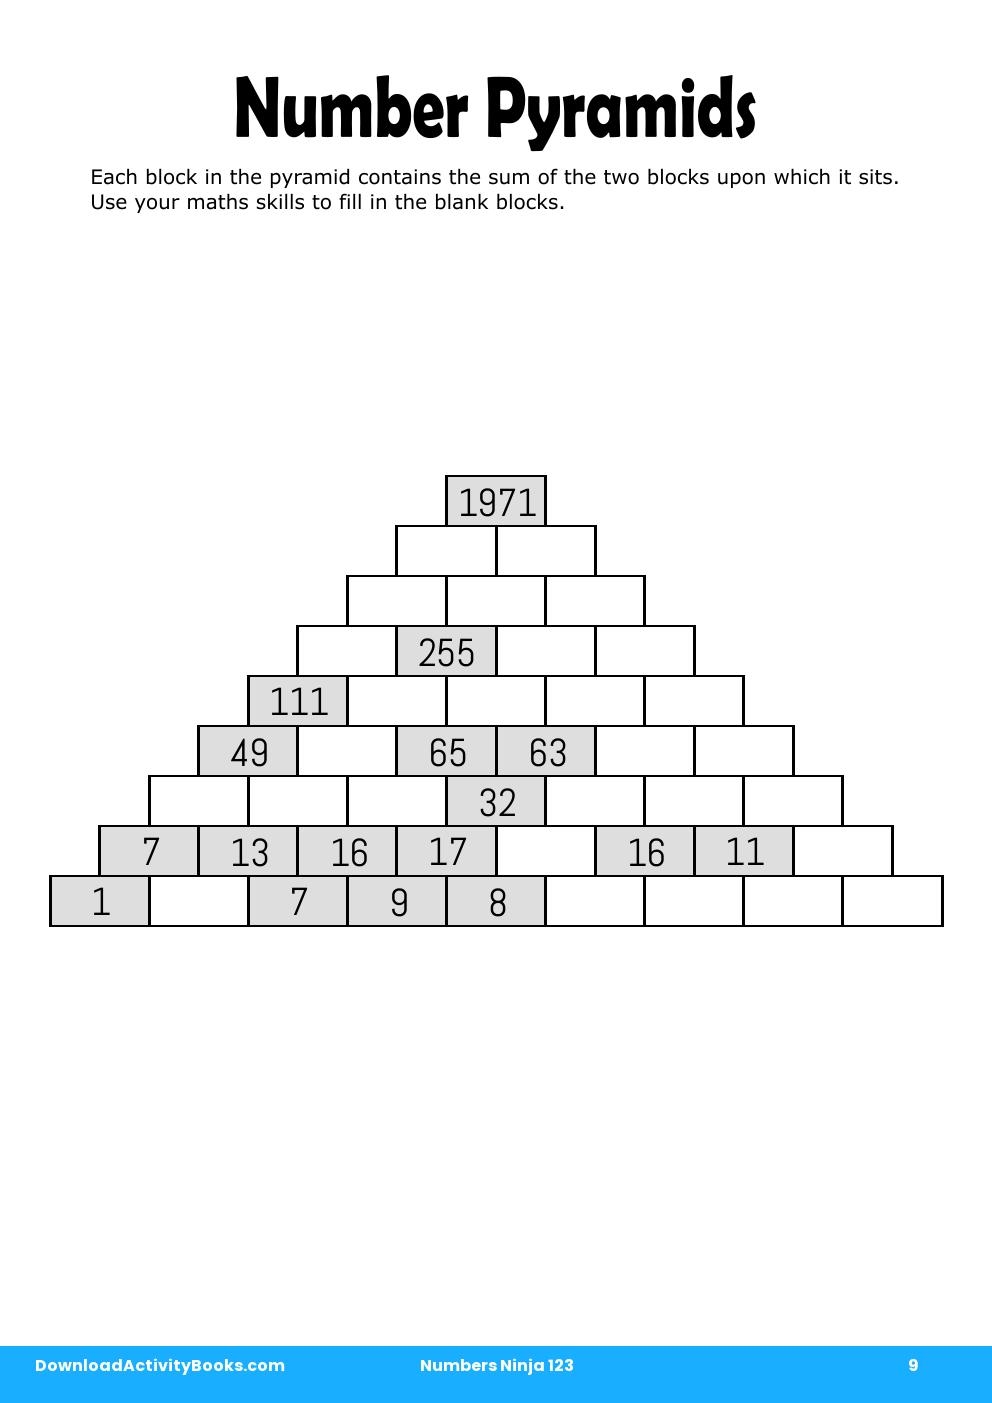 Number Pyramids in Numbers Ninja 123